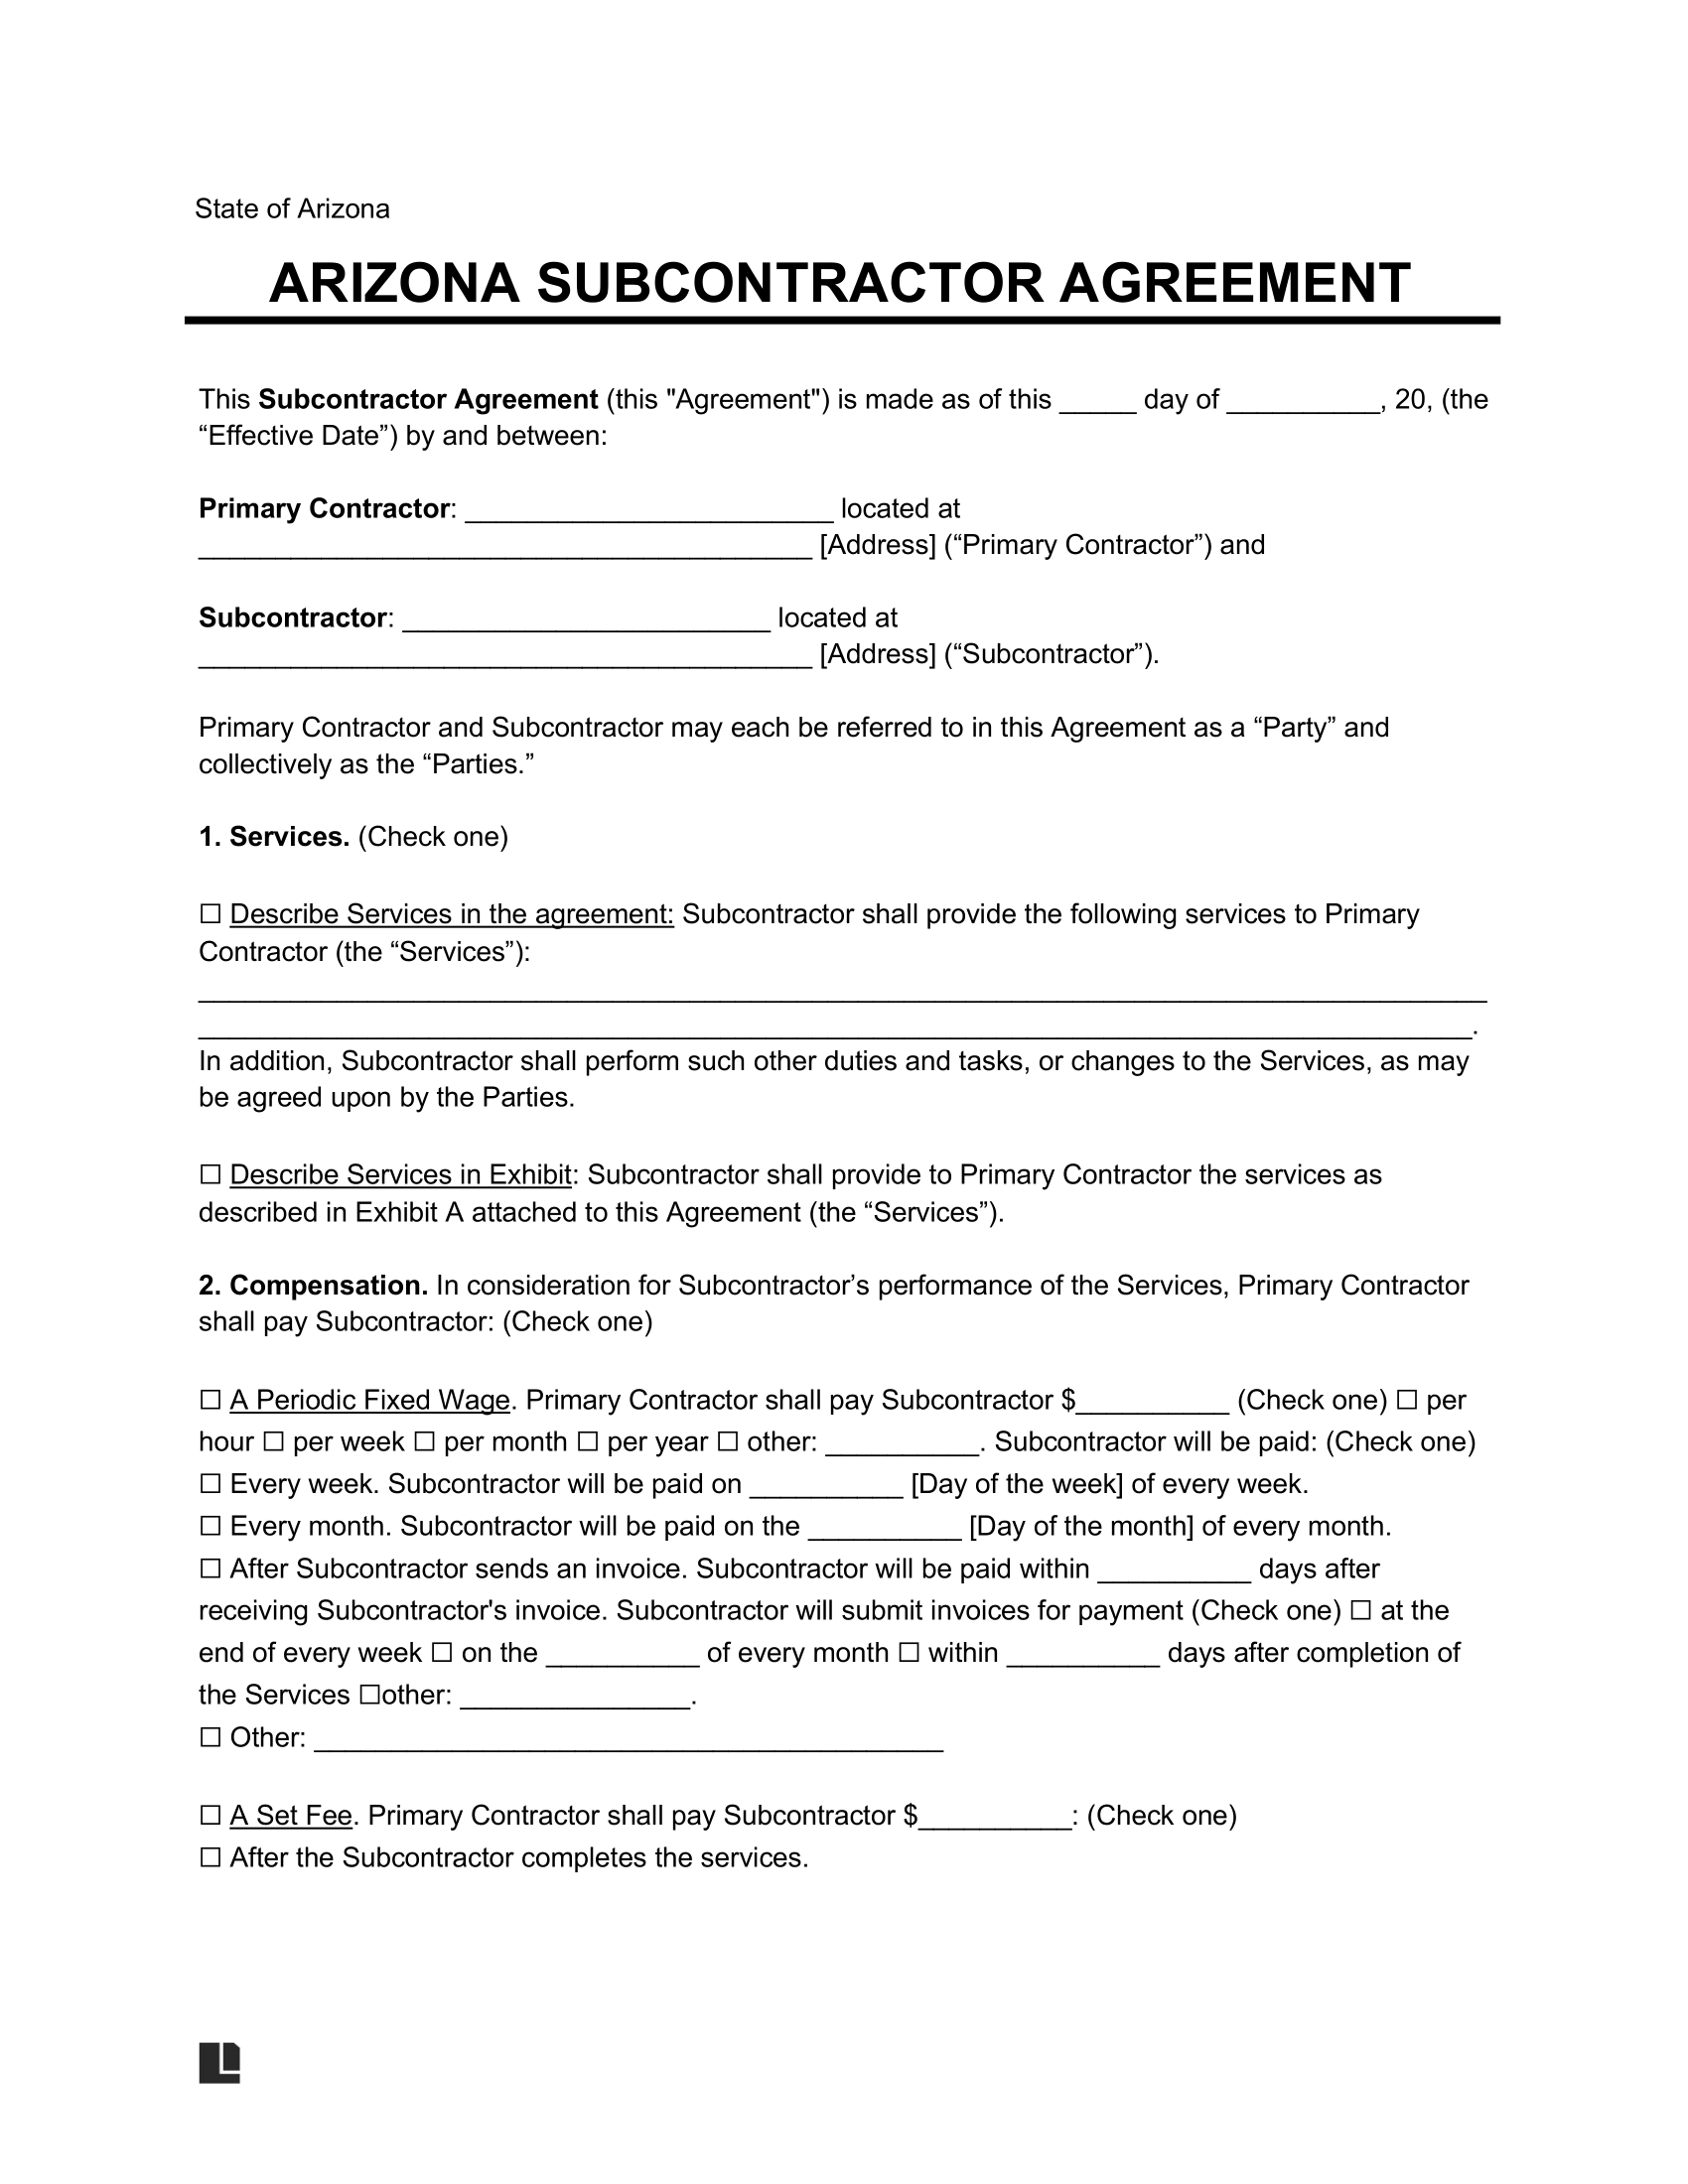 arizona subcontractor agreement template